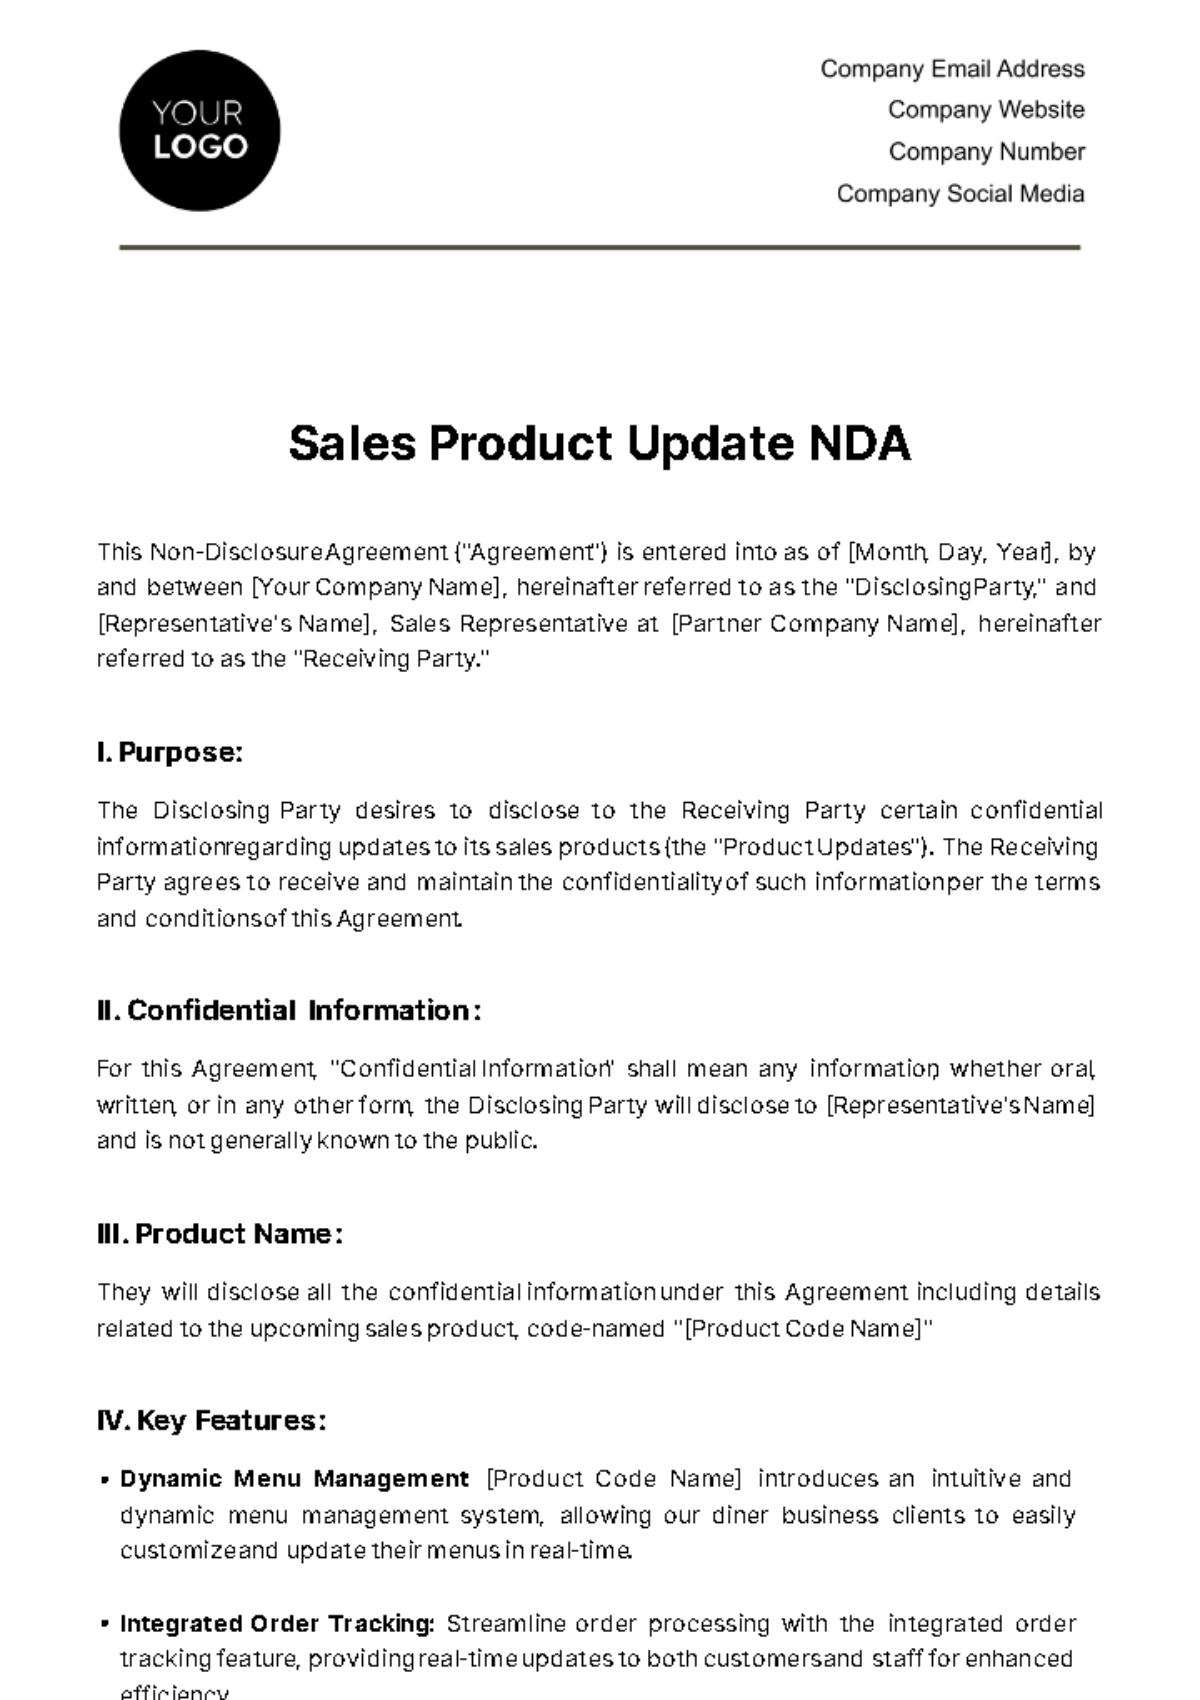 Sales Product Update NDA Template